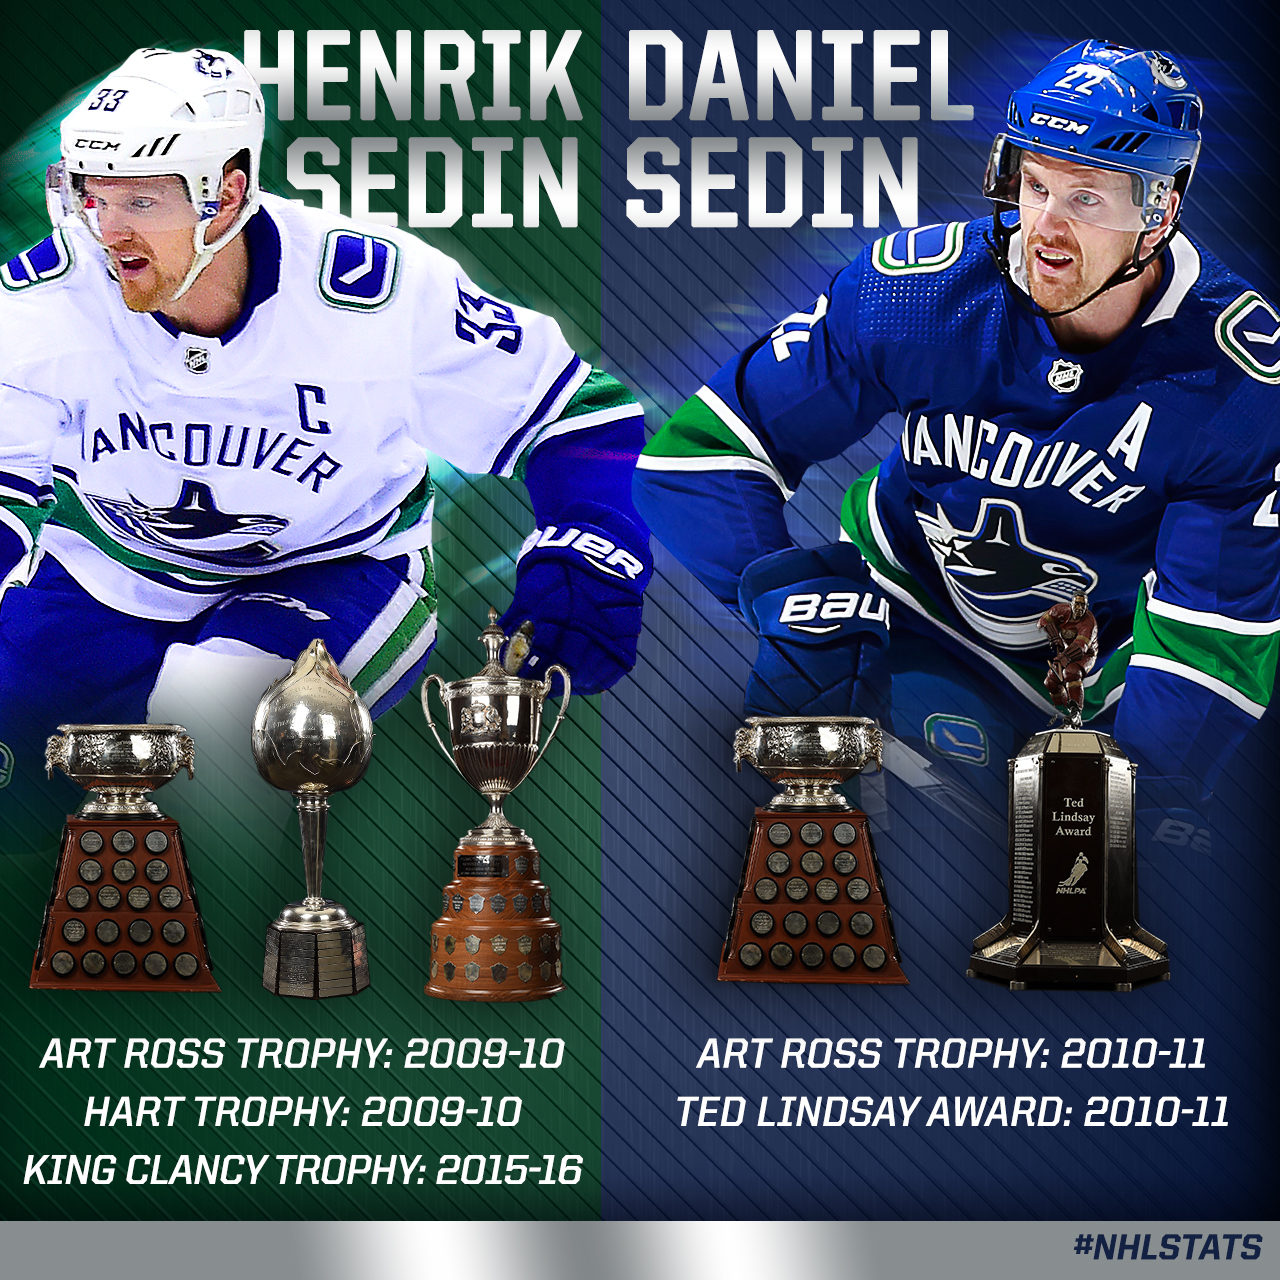 Sedin twins retiring: Henrik and Daniel leaving NHL after season - Sports  Illustrated